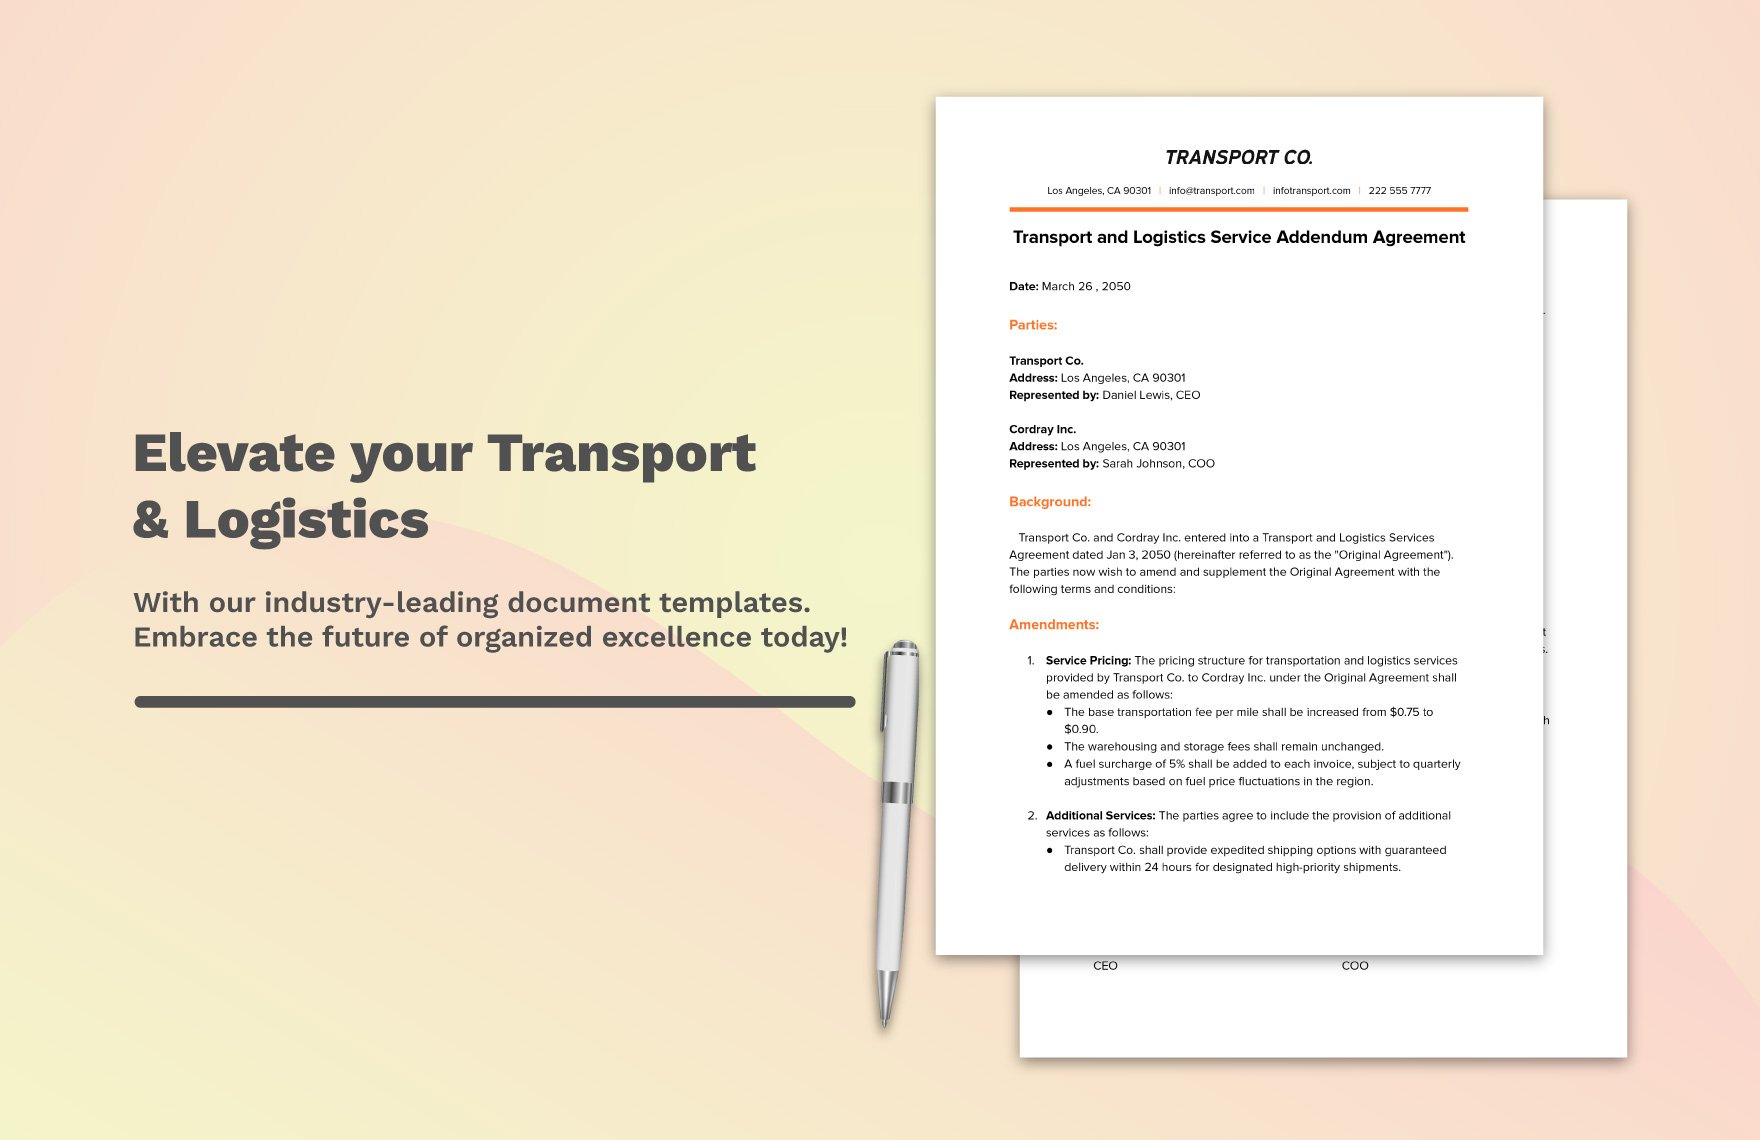 Transport and Logistics Service Addendum Agreement Template